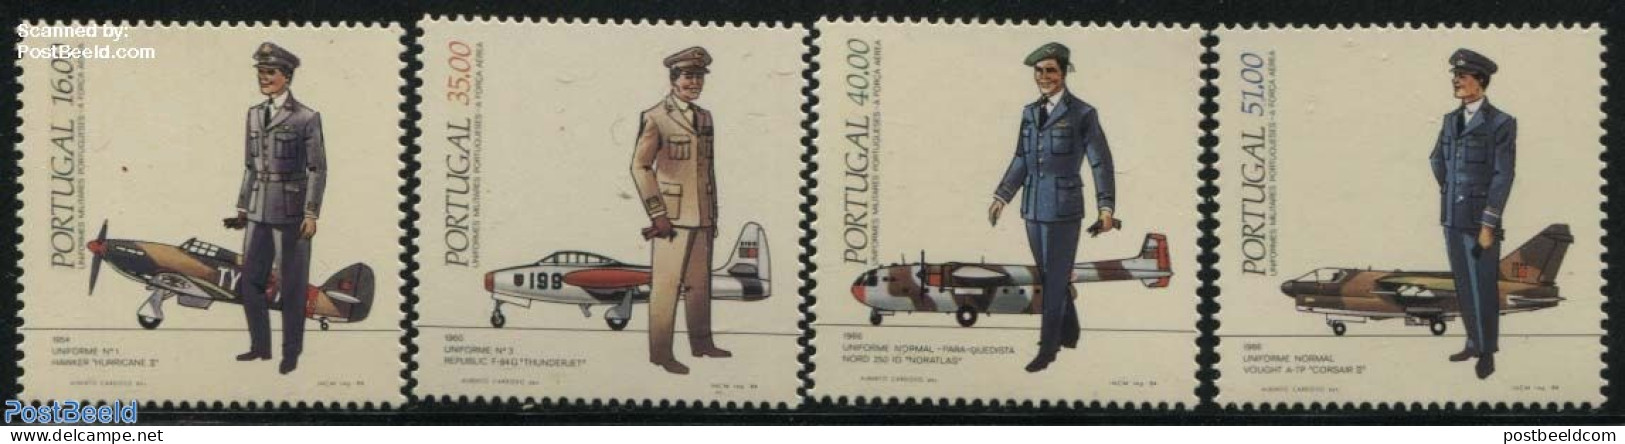 Portugal 1984 Uniforms & Aeroplanes 4v, Mint NH, Transport - Various - Aircraft & Aviation - Uniforms - Ungebraucht